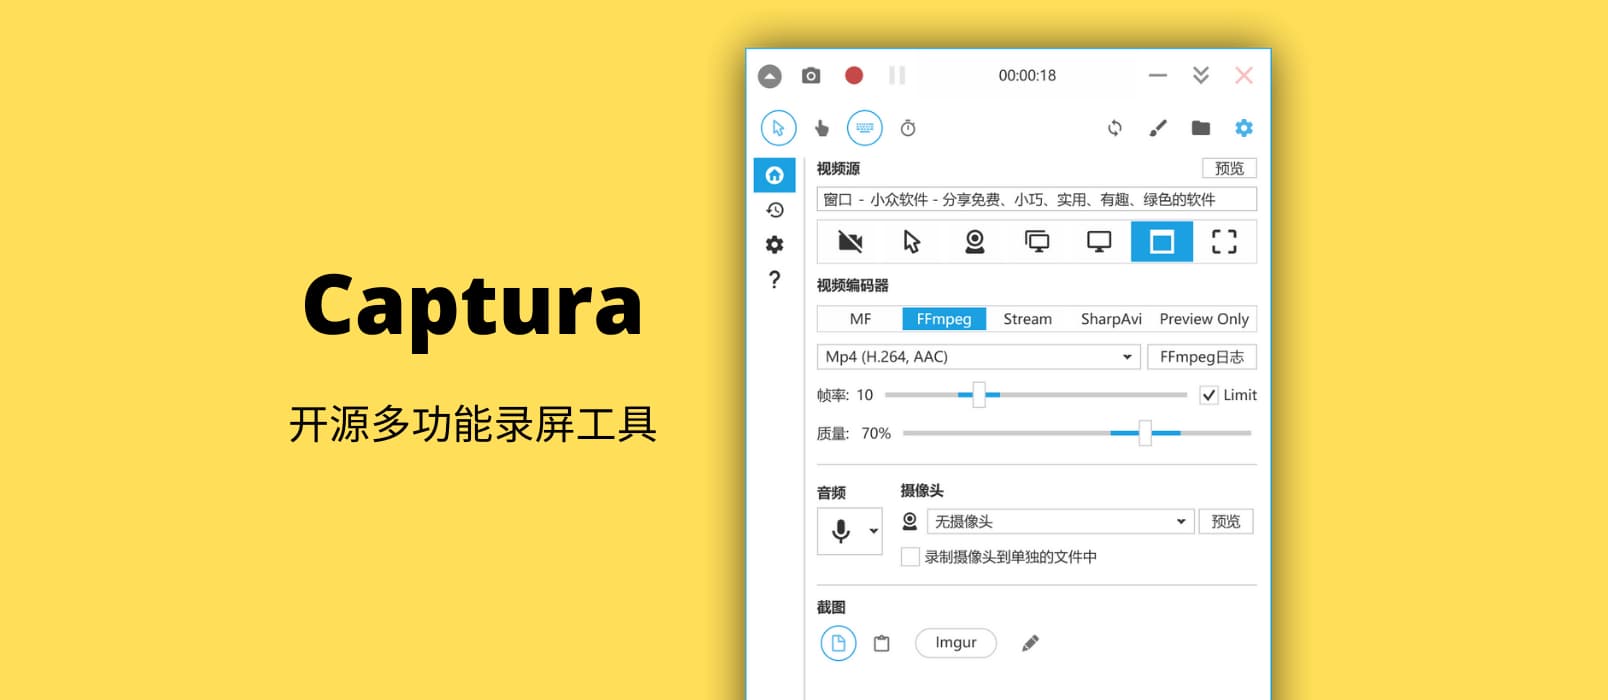 Captura - 带键盘按键录制的录屏工具，支持直播[Windows] 1